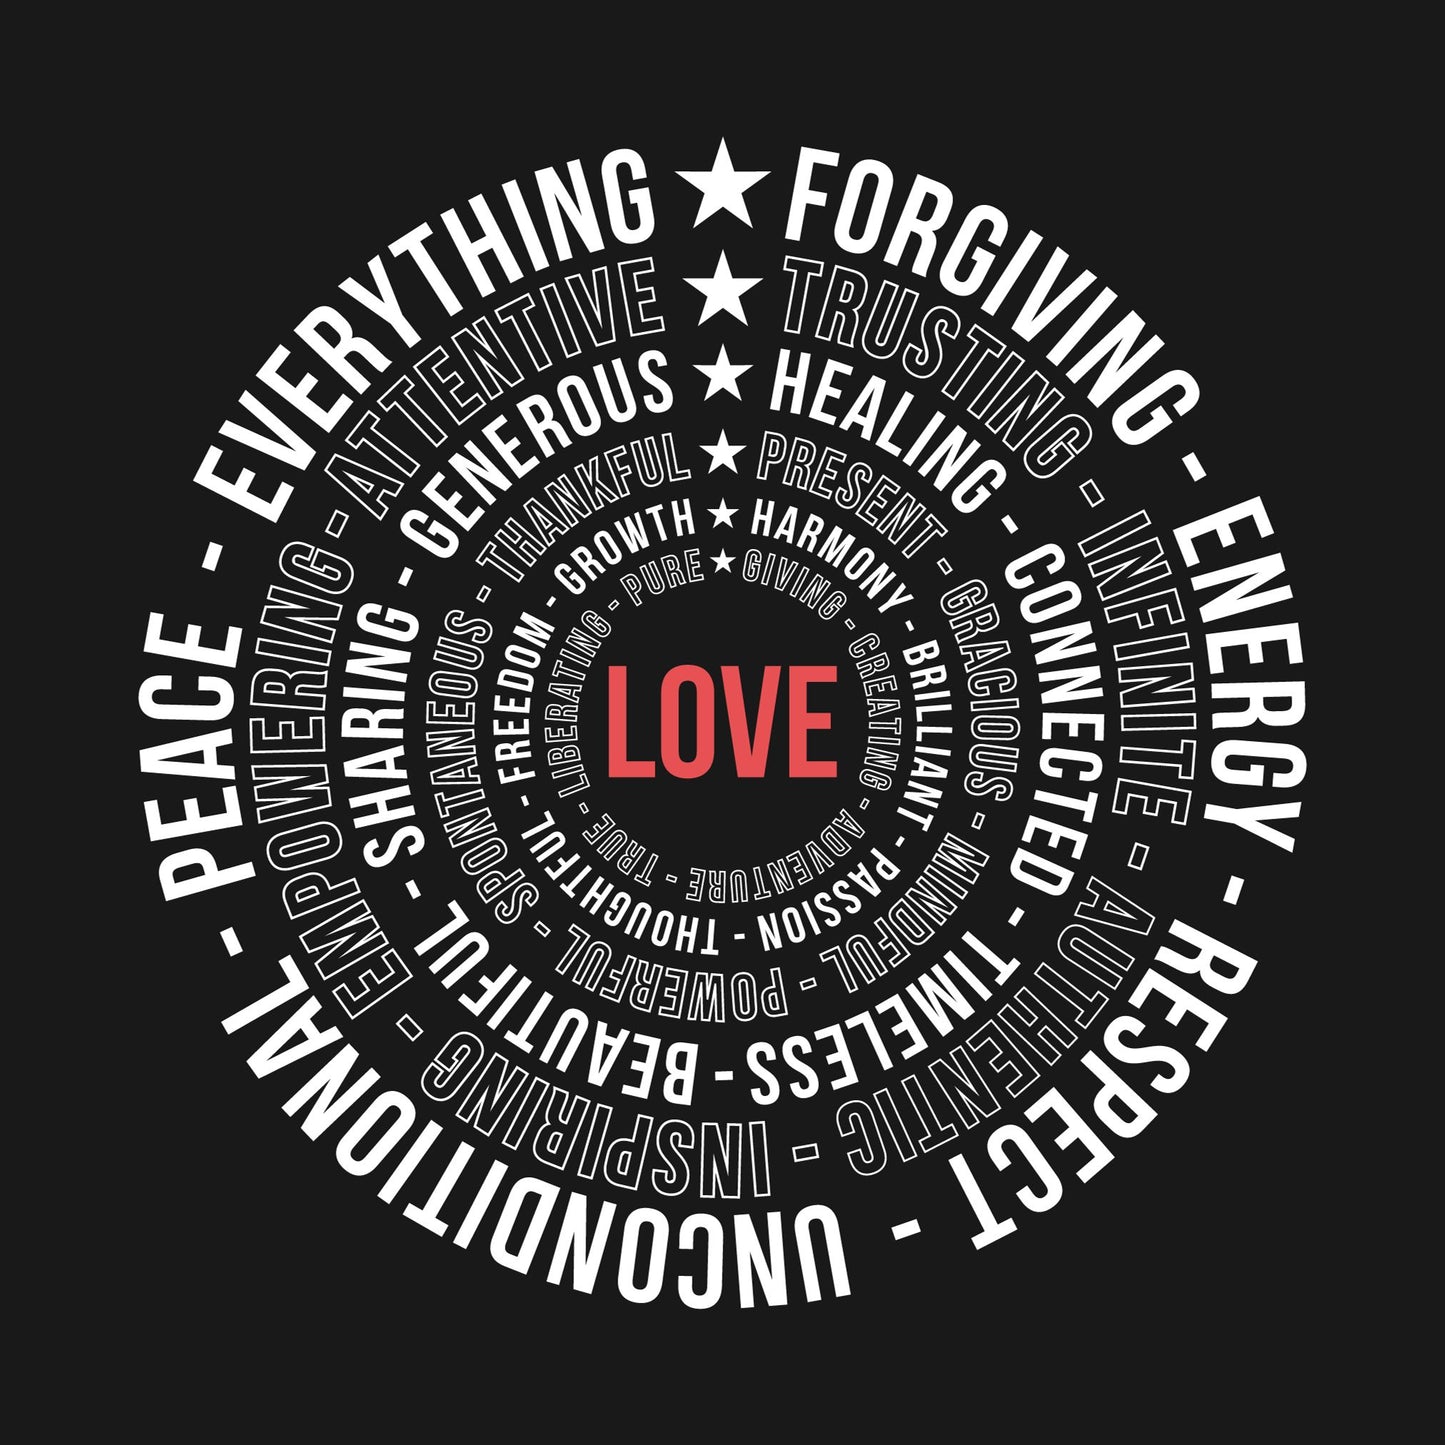 Love is Everything (Stars) logo D&B Originals